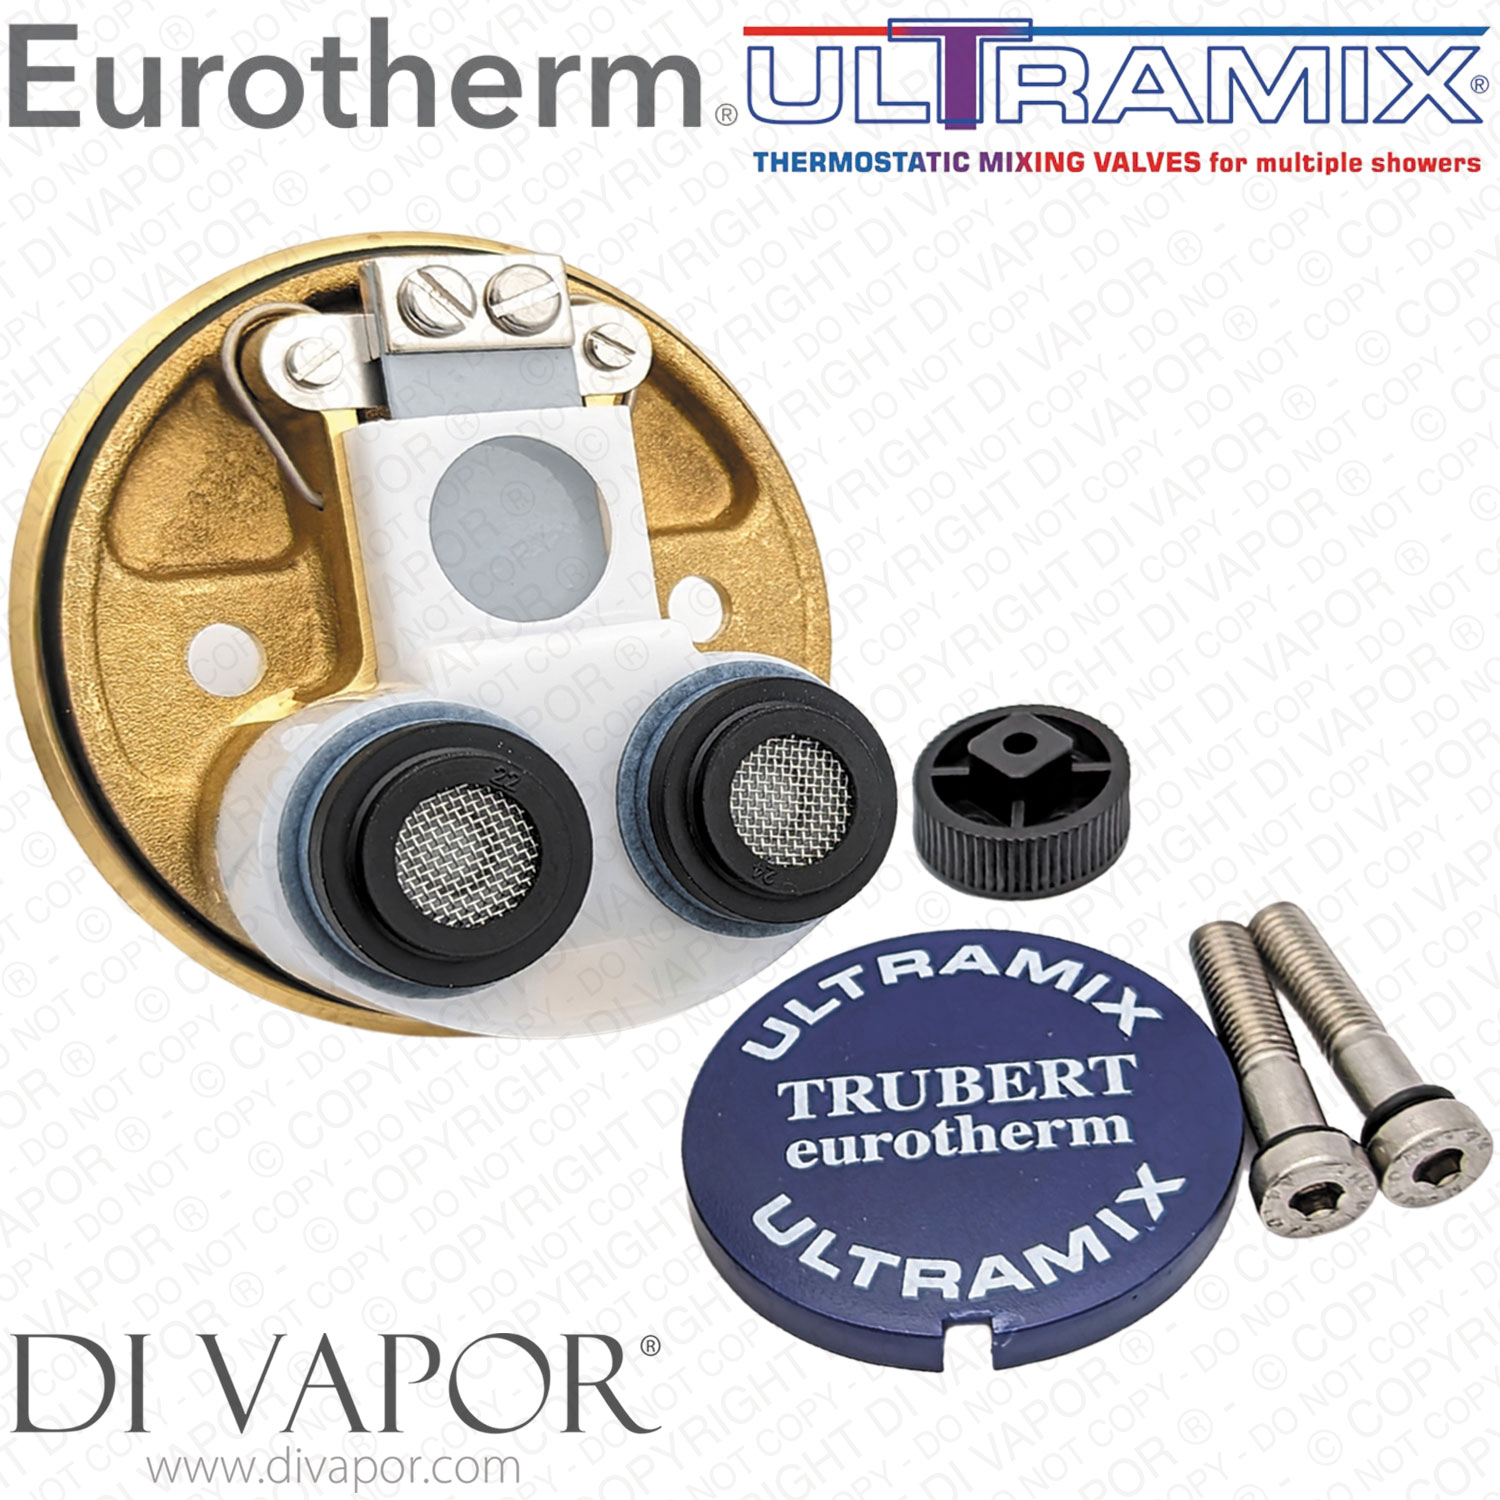 Ultramix Trubert Eurotherm TX137 Thermostatic Cartridge (TX91E37 